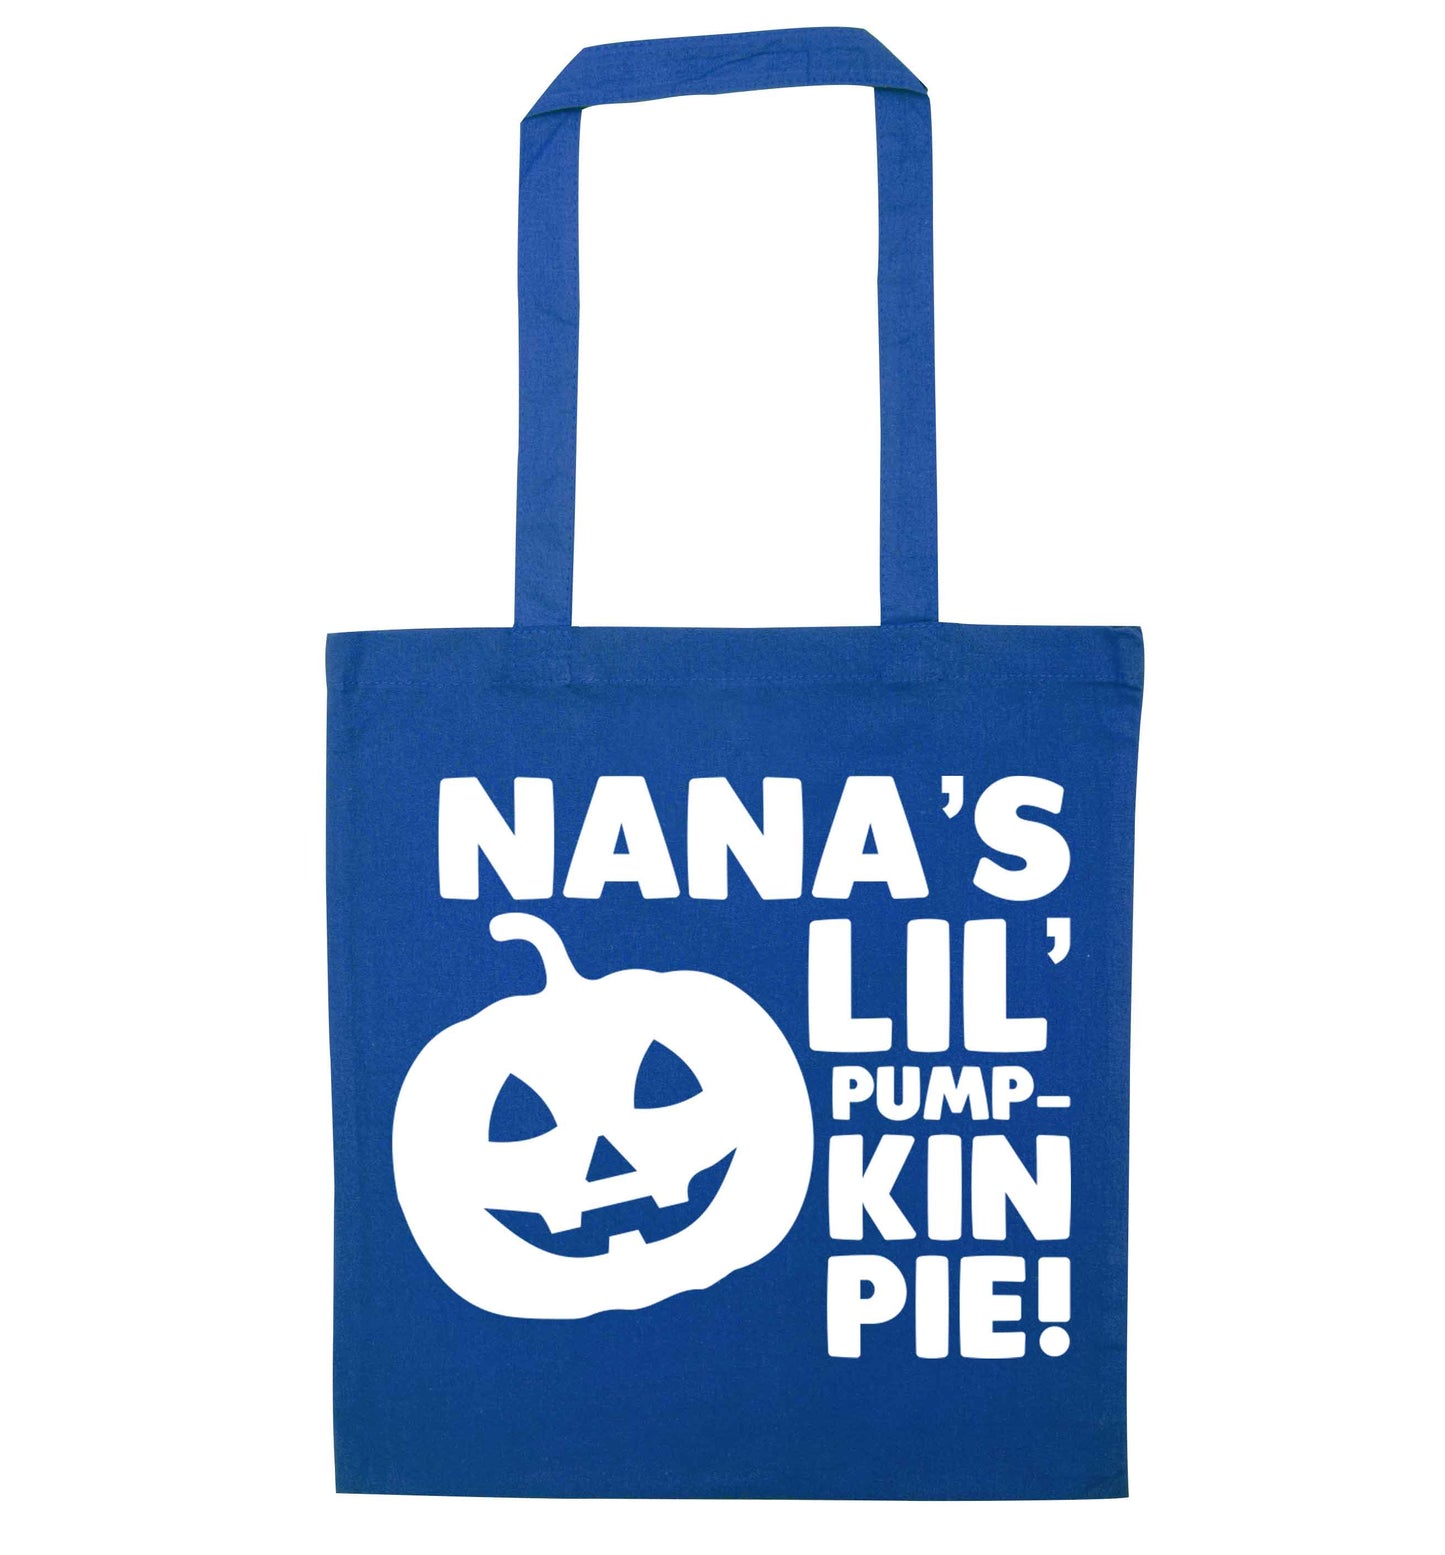 Nana's lil' pumpkin pie blue tote bag